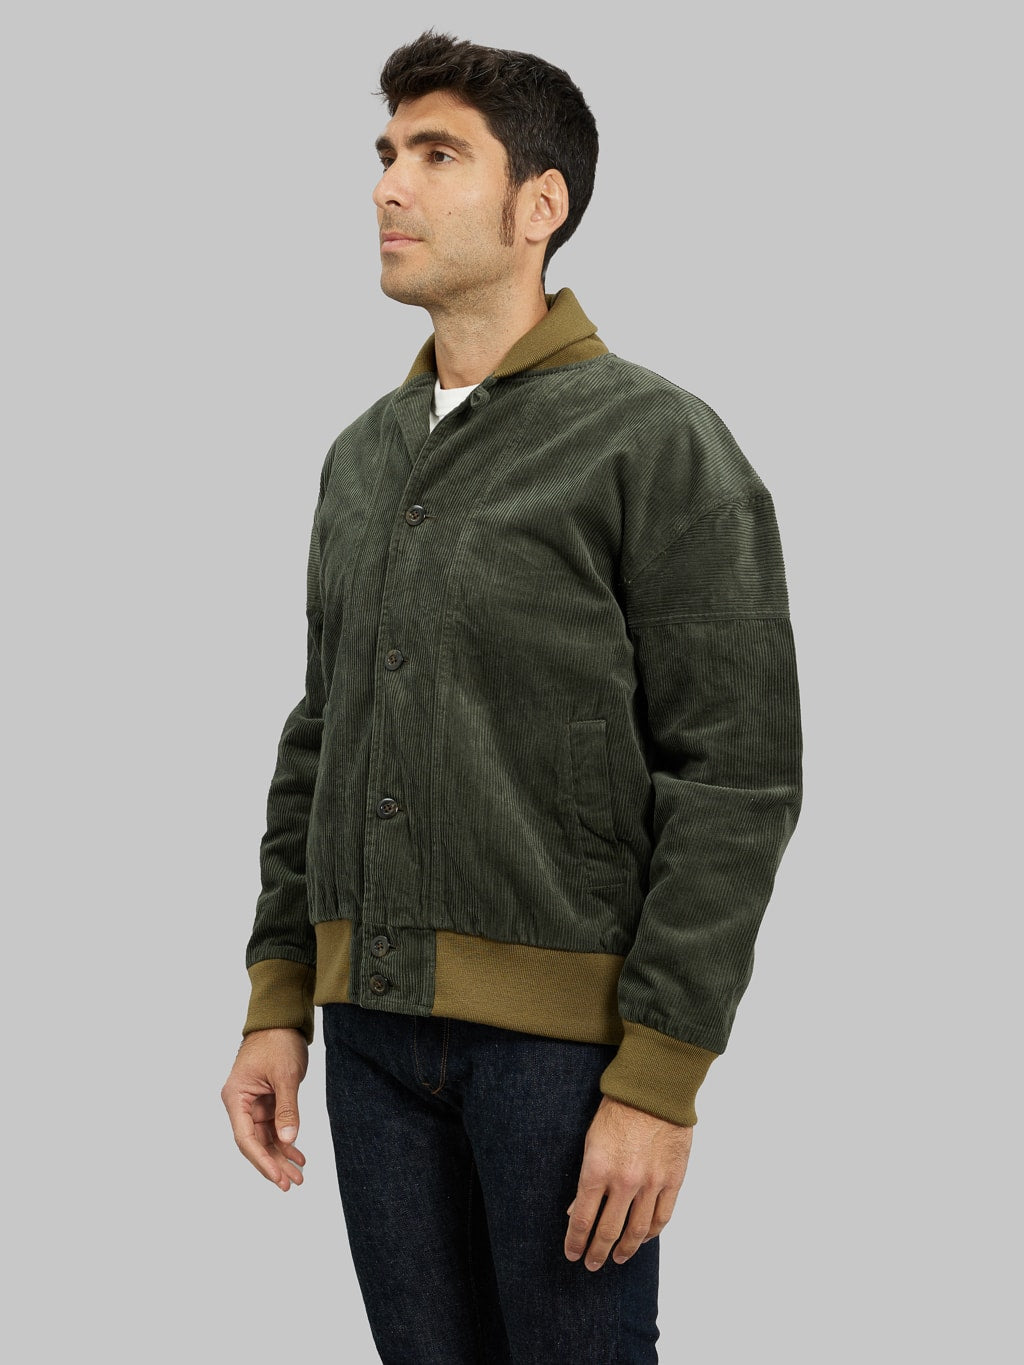 Tanuki Sazanami Corduroy Bayberry Dyed Green Jacket  model side fit